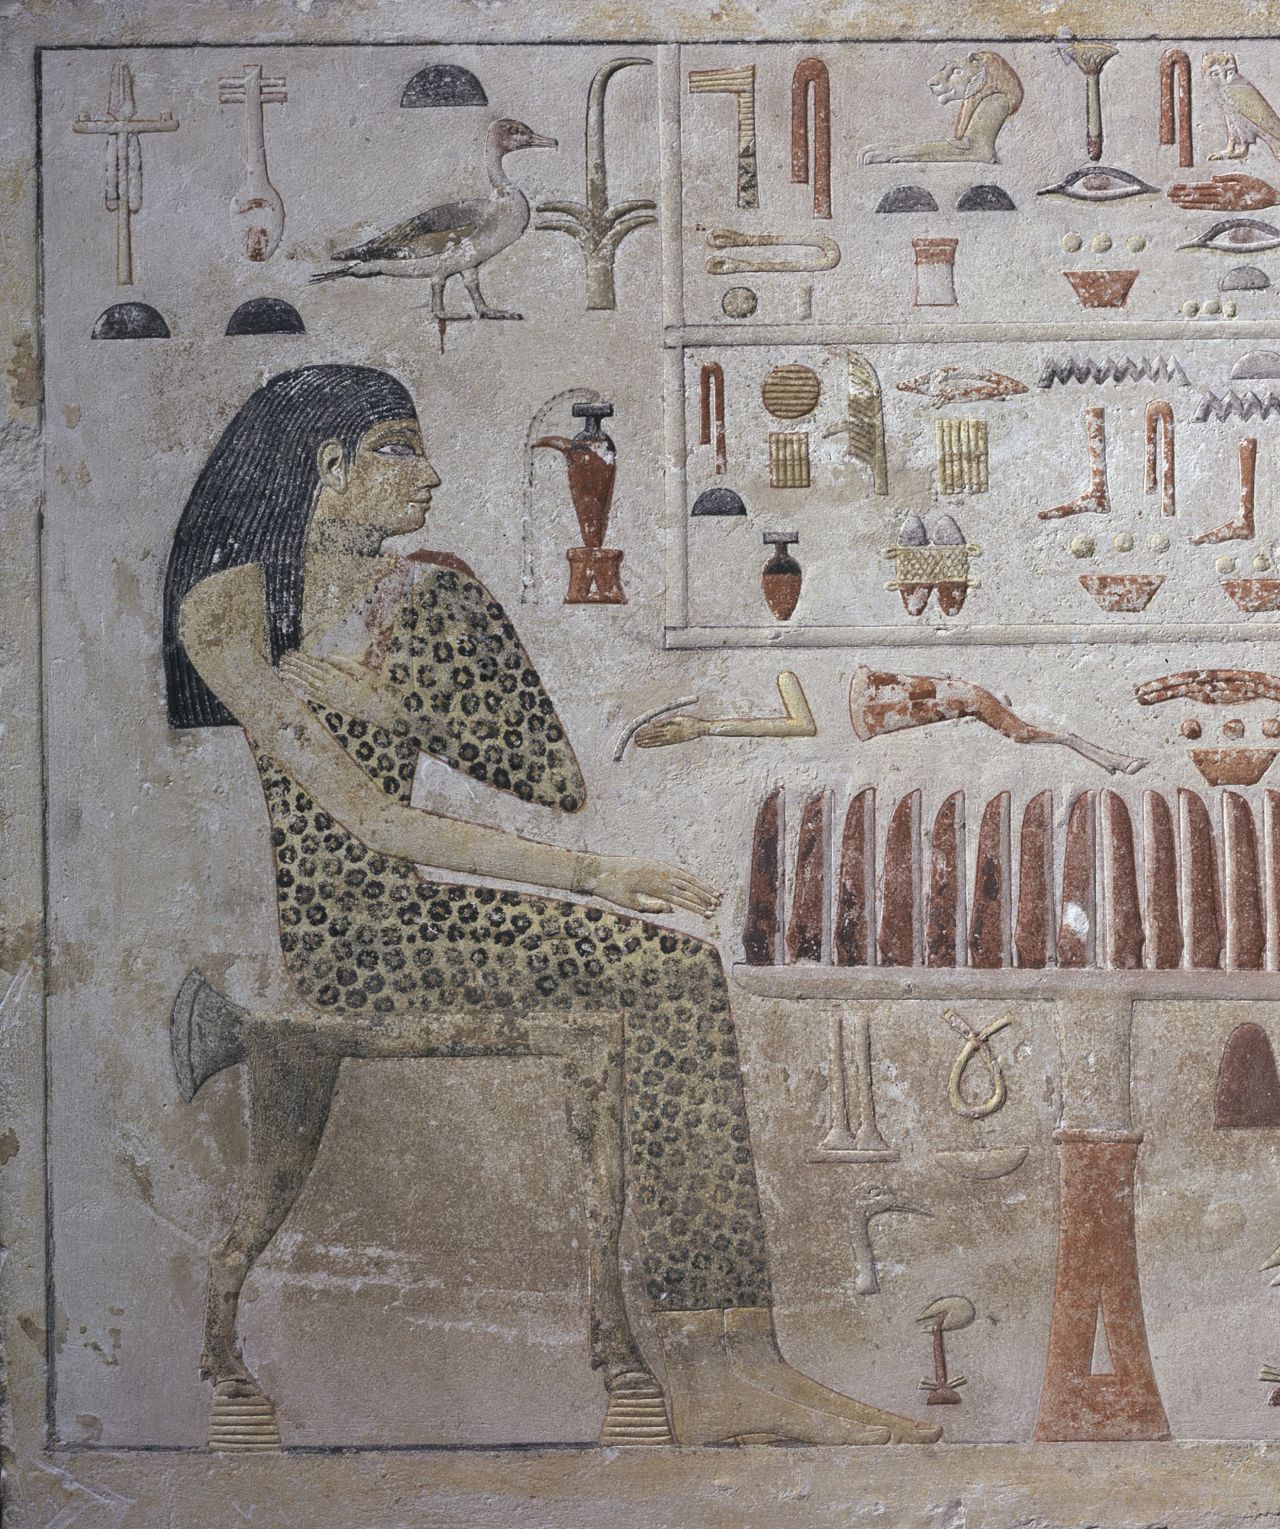 An Egyptian stele shows Nefertiabet, an ancient Egyptian princess wearing a leopard down.